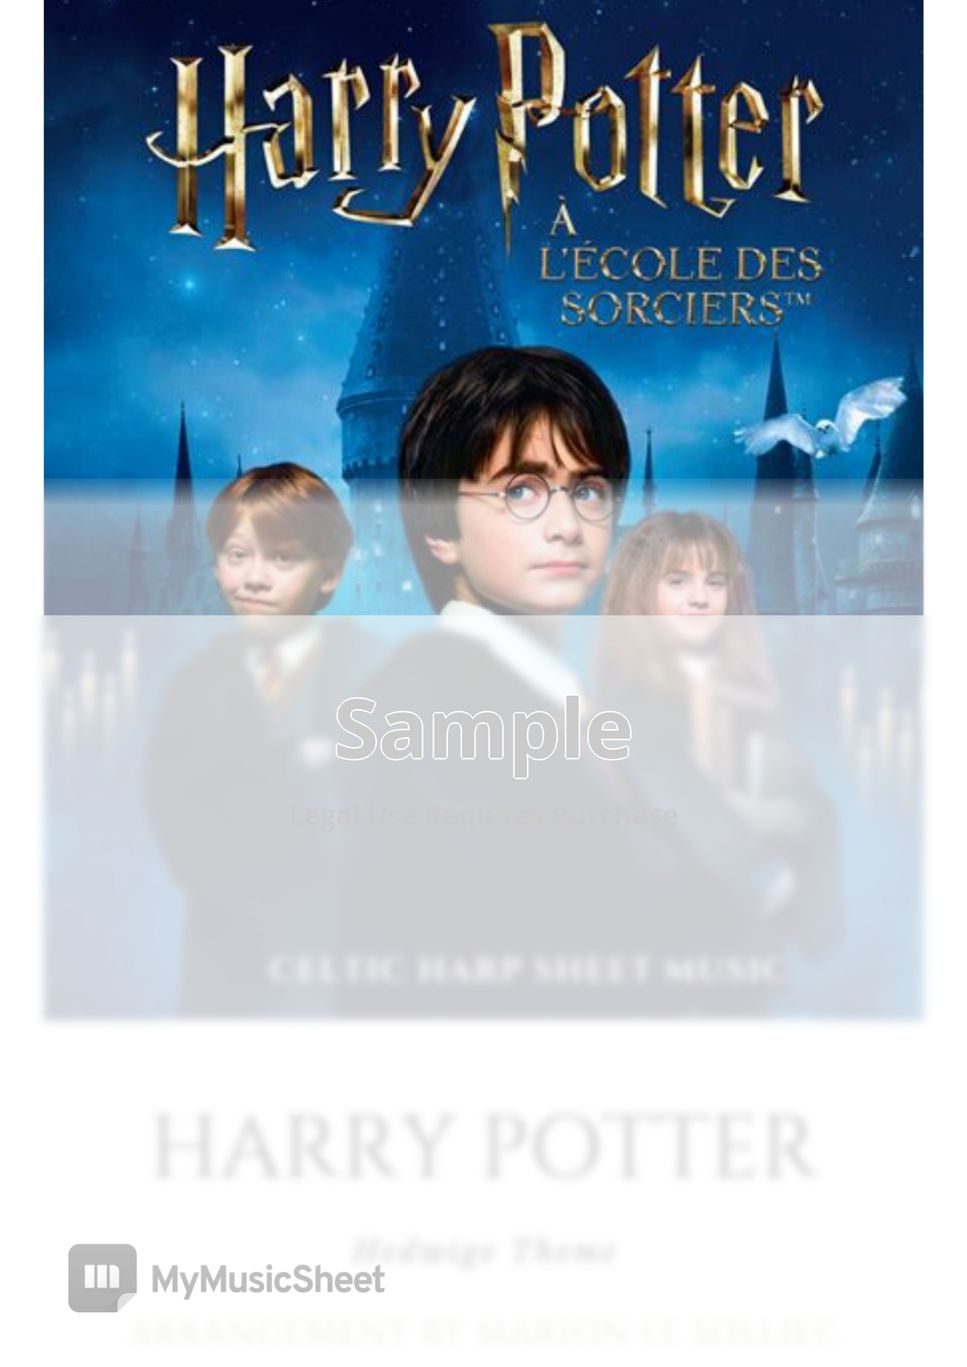 Harry Potter™ - Affiche Sorcellerie avec Hedwige